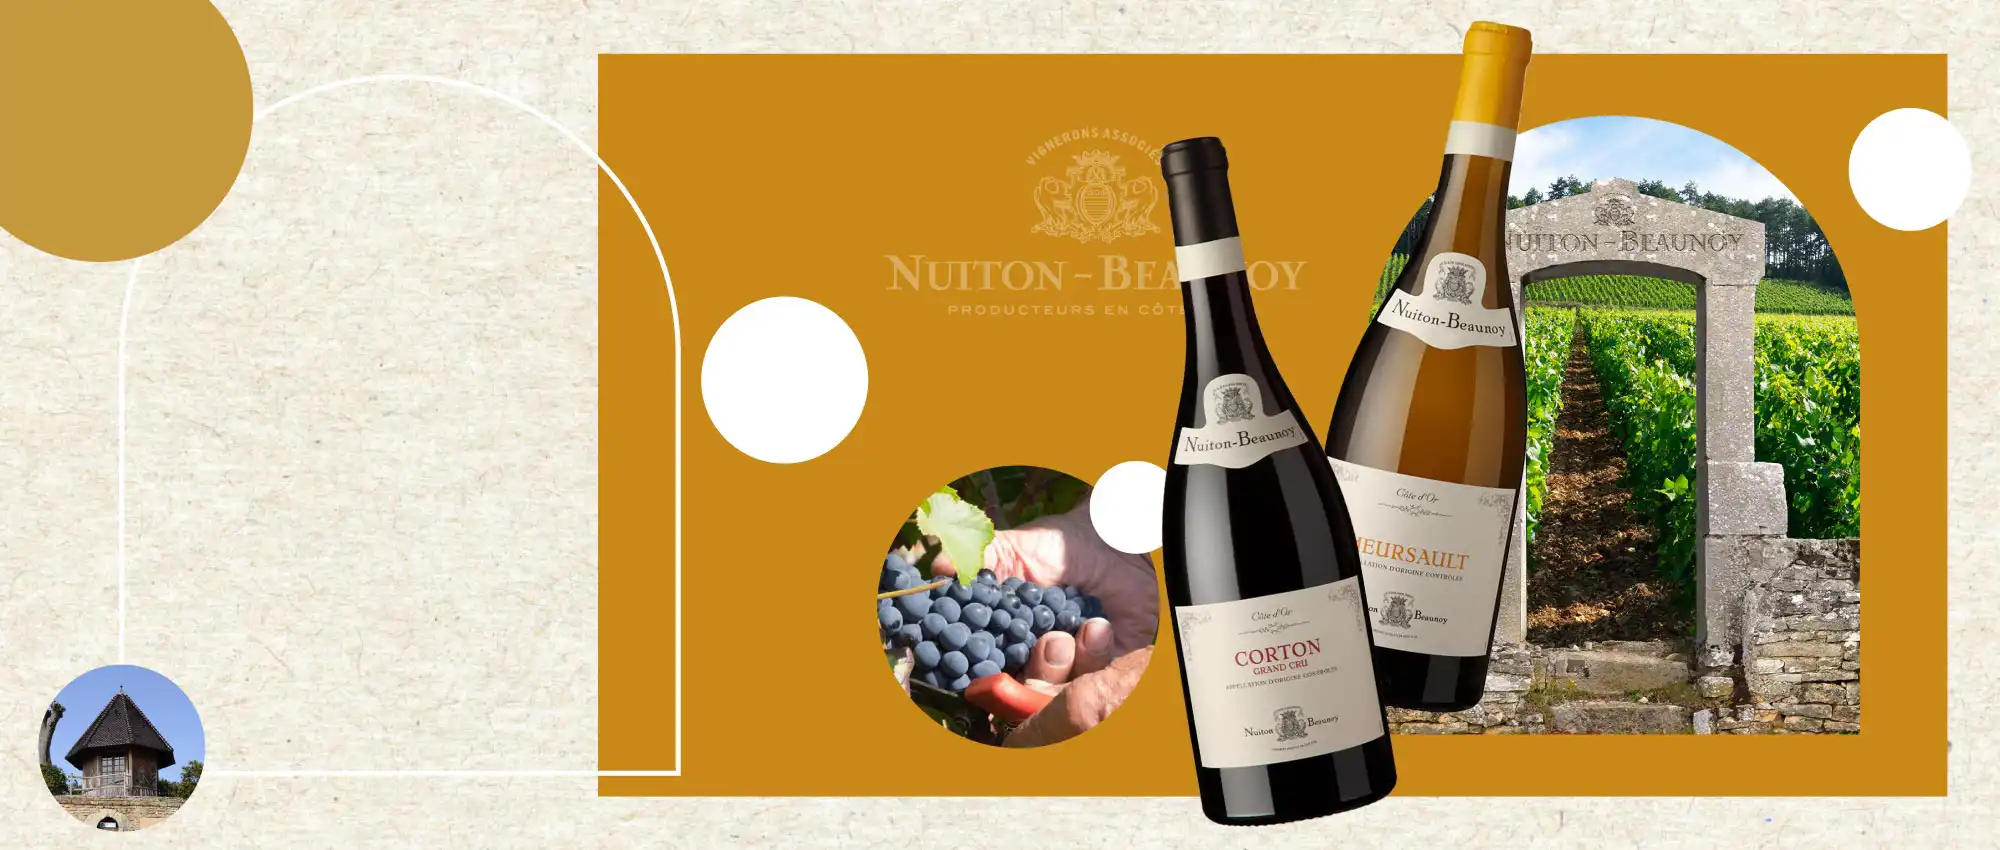 法國 勃根地葡萄酒 日月酒莊 France wine Bourgogne Nuiton Beaunoy